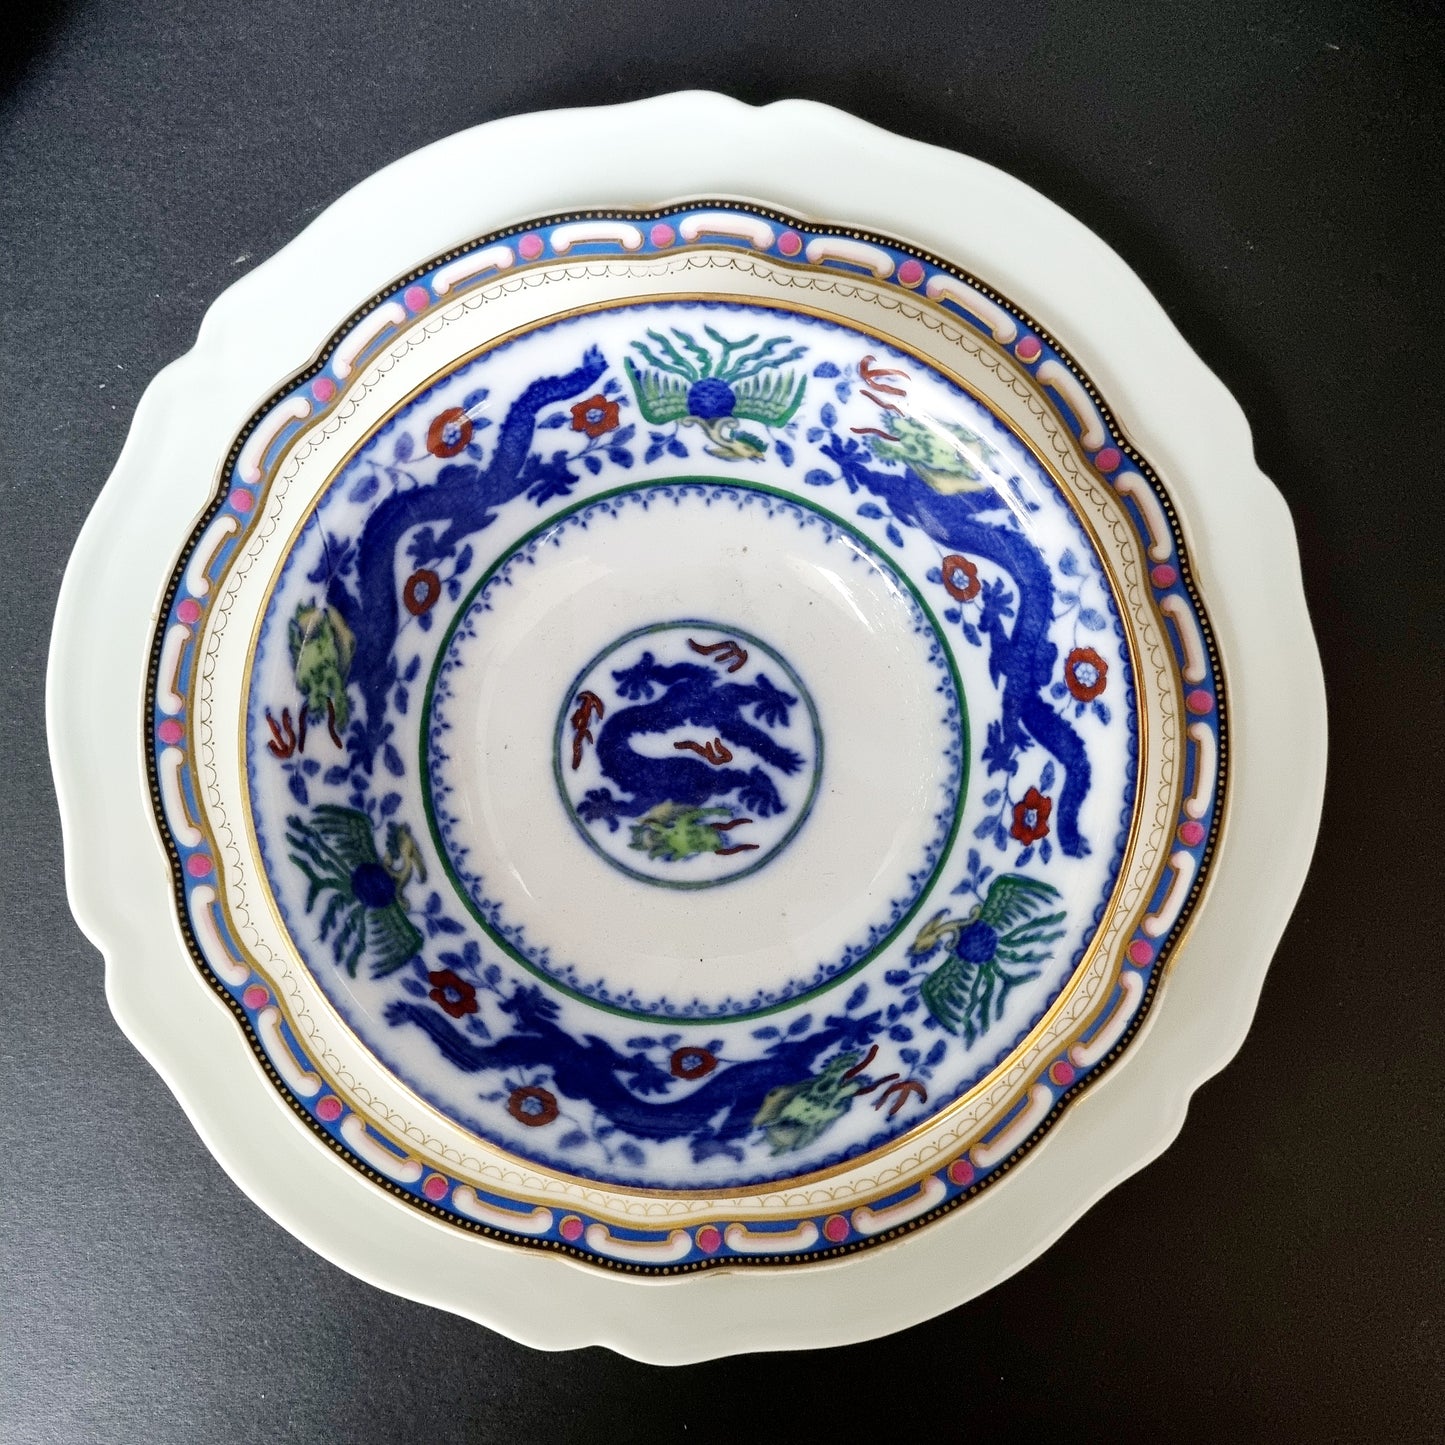 6 platos de vajilla blanca de porcelana de Limoges